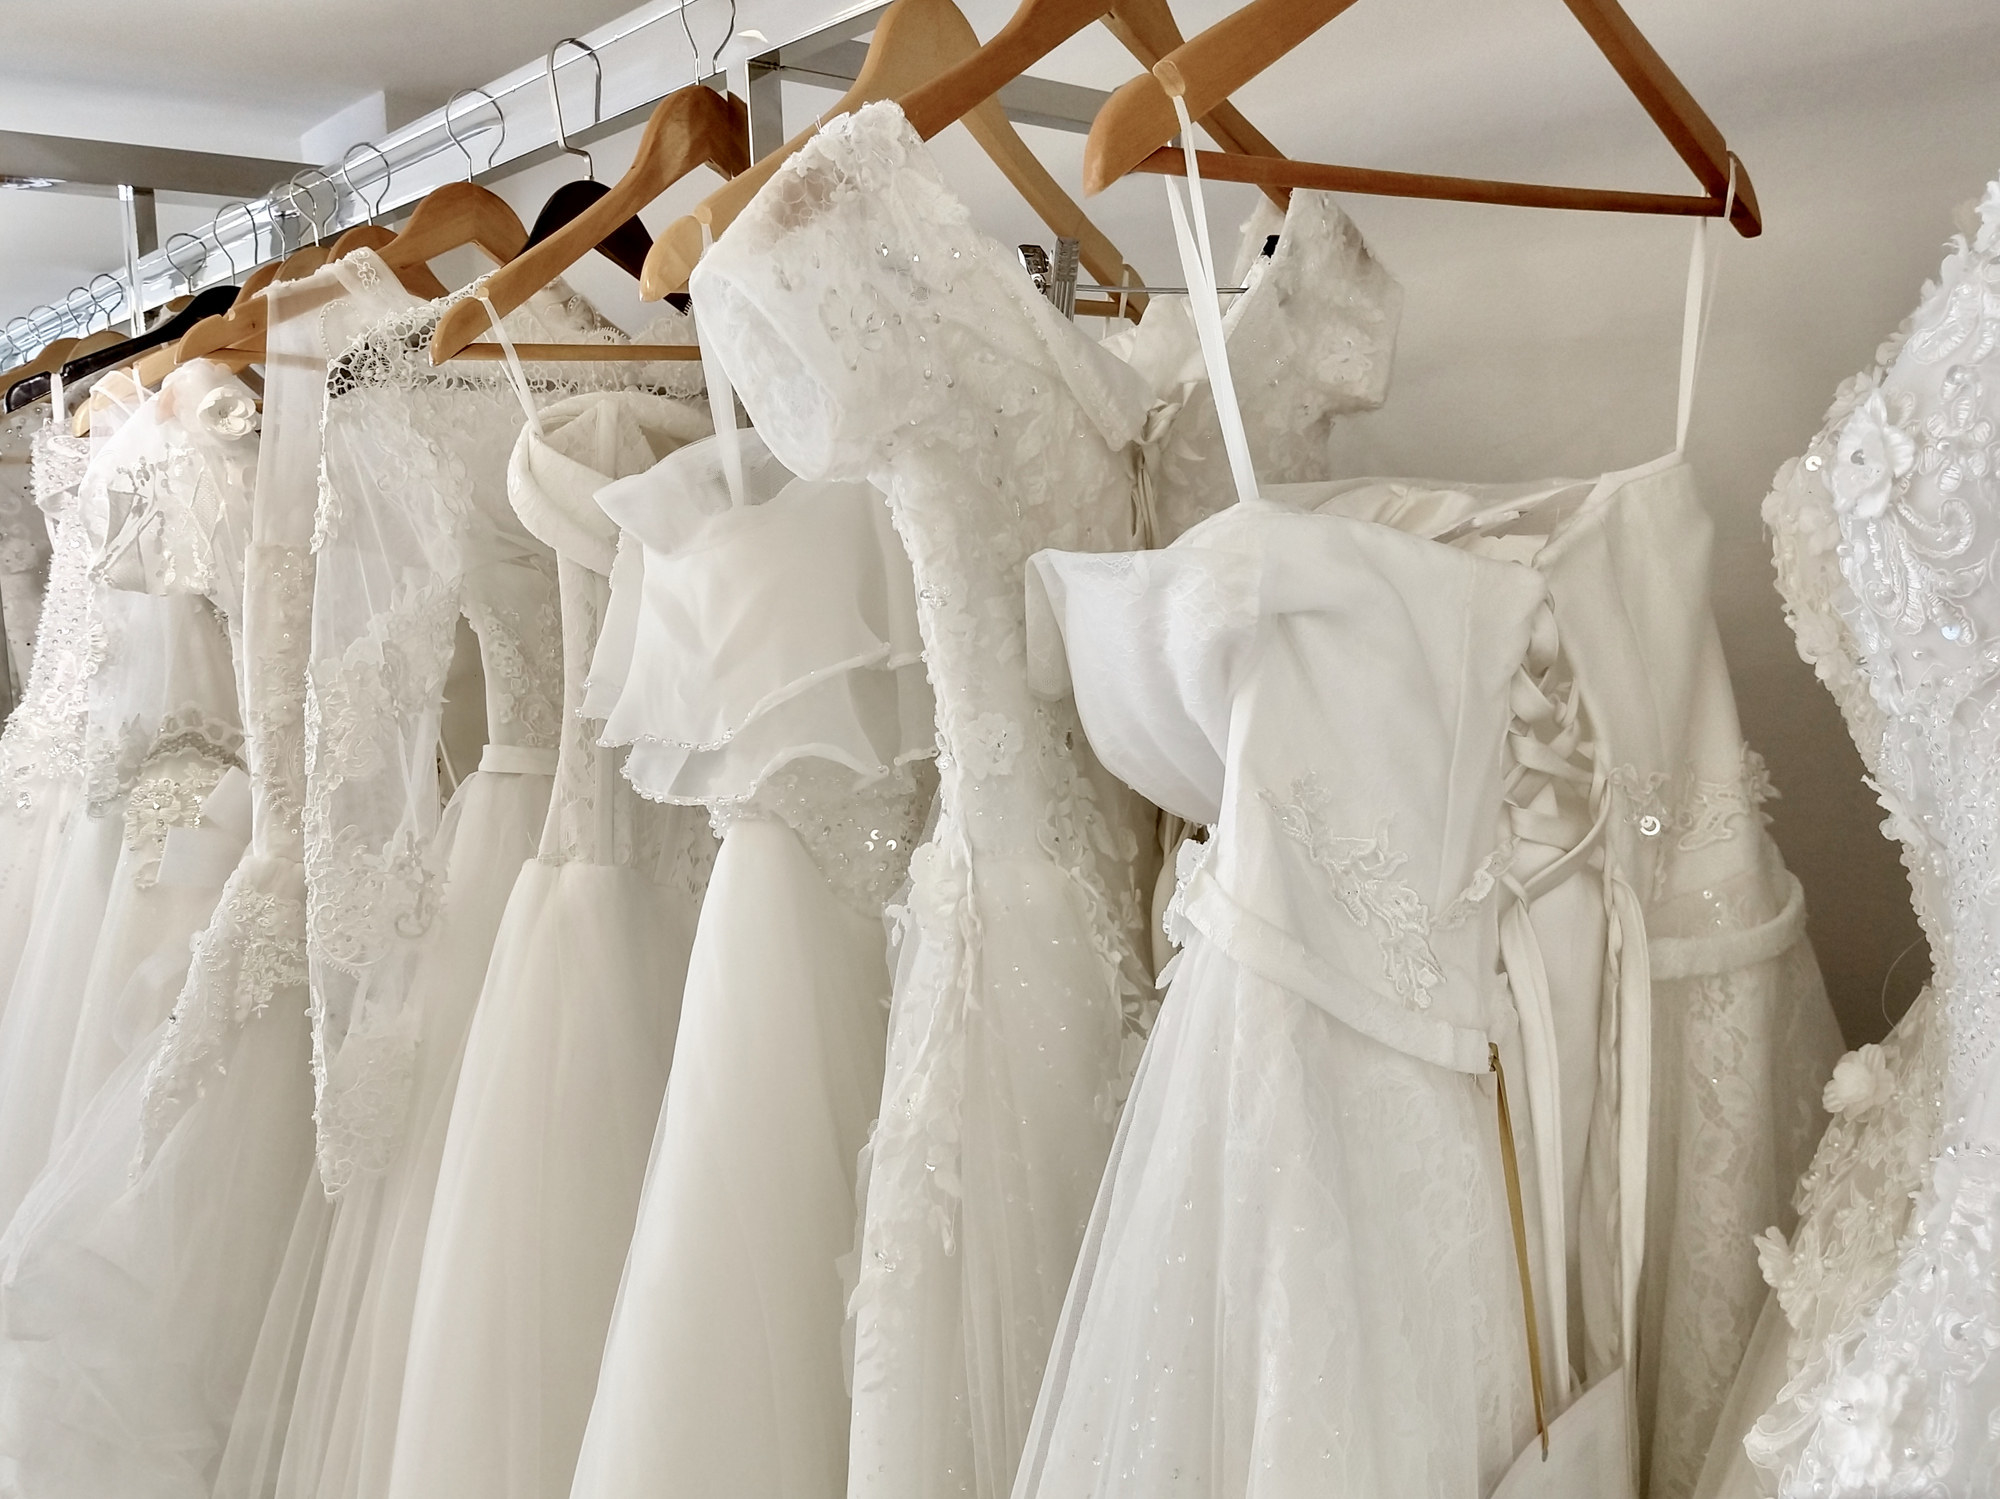 A shopping rack of white wedding dresses